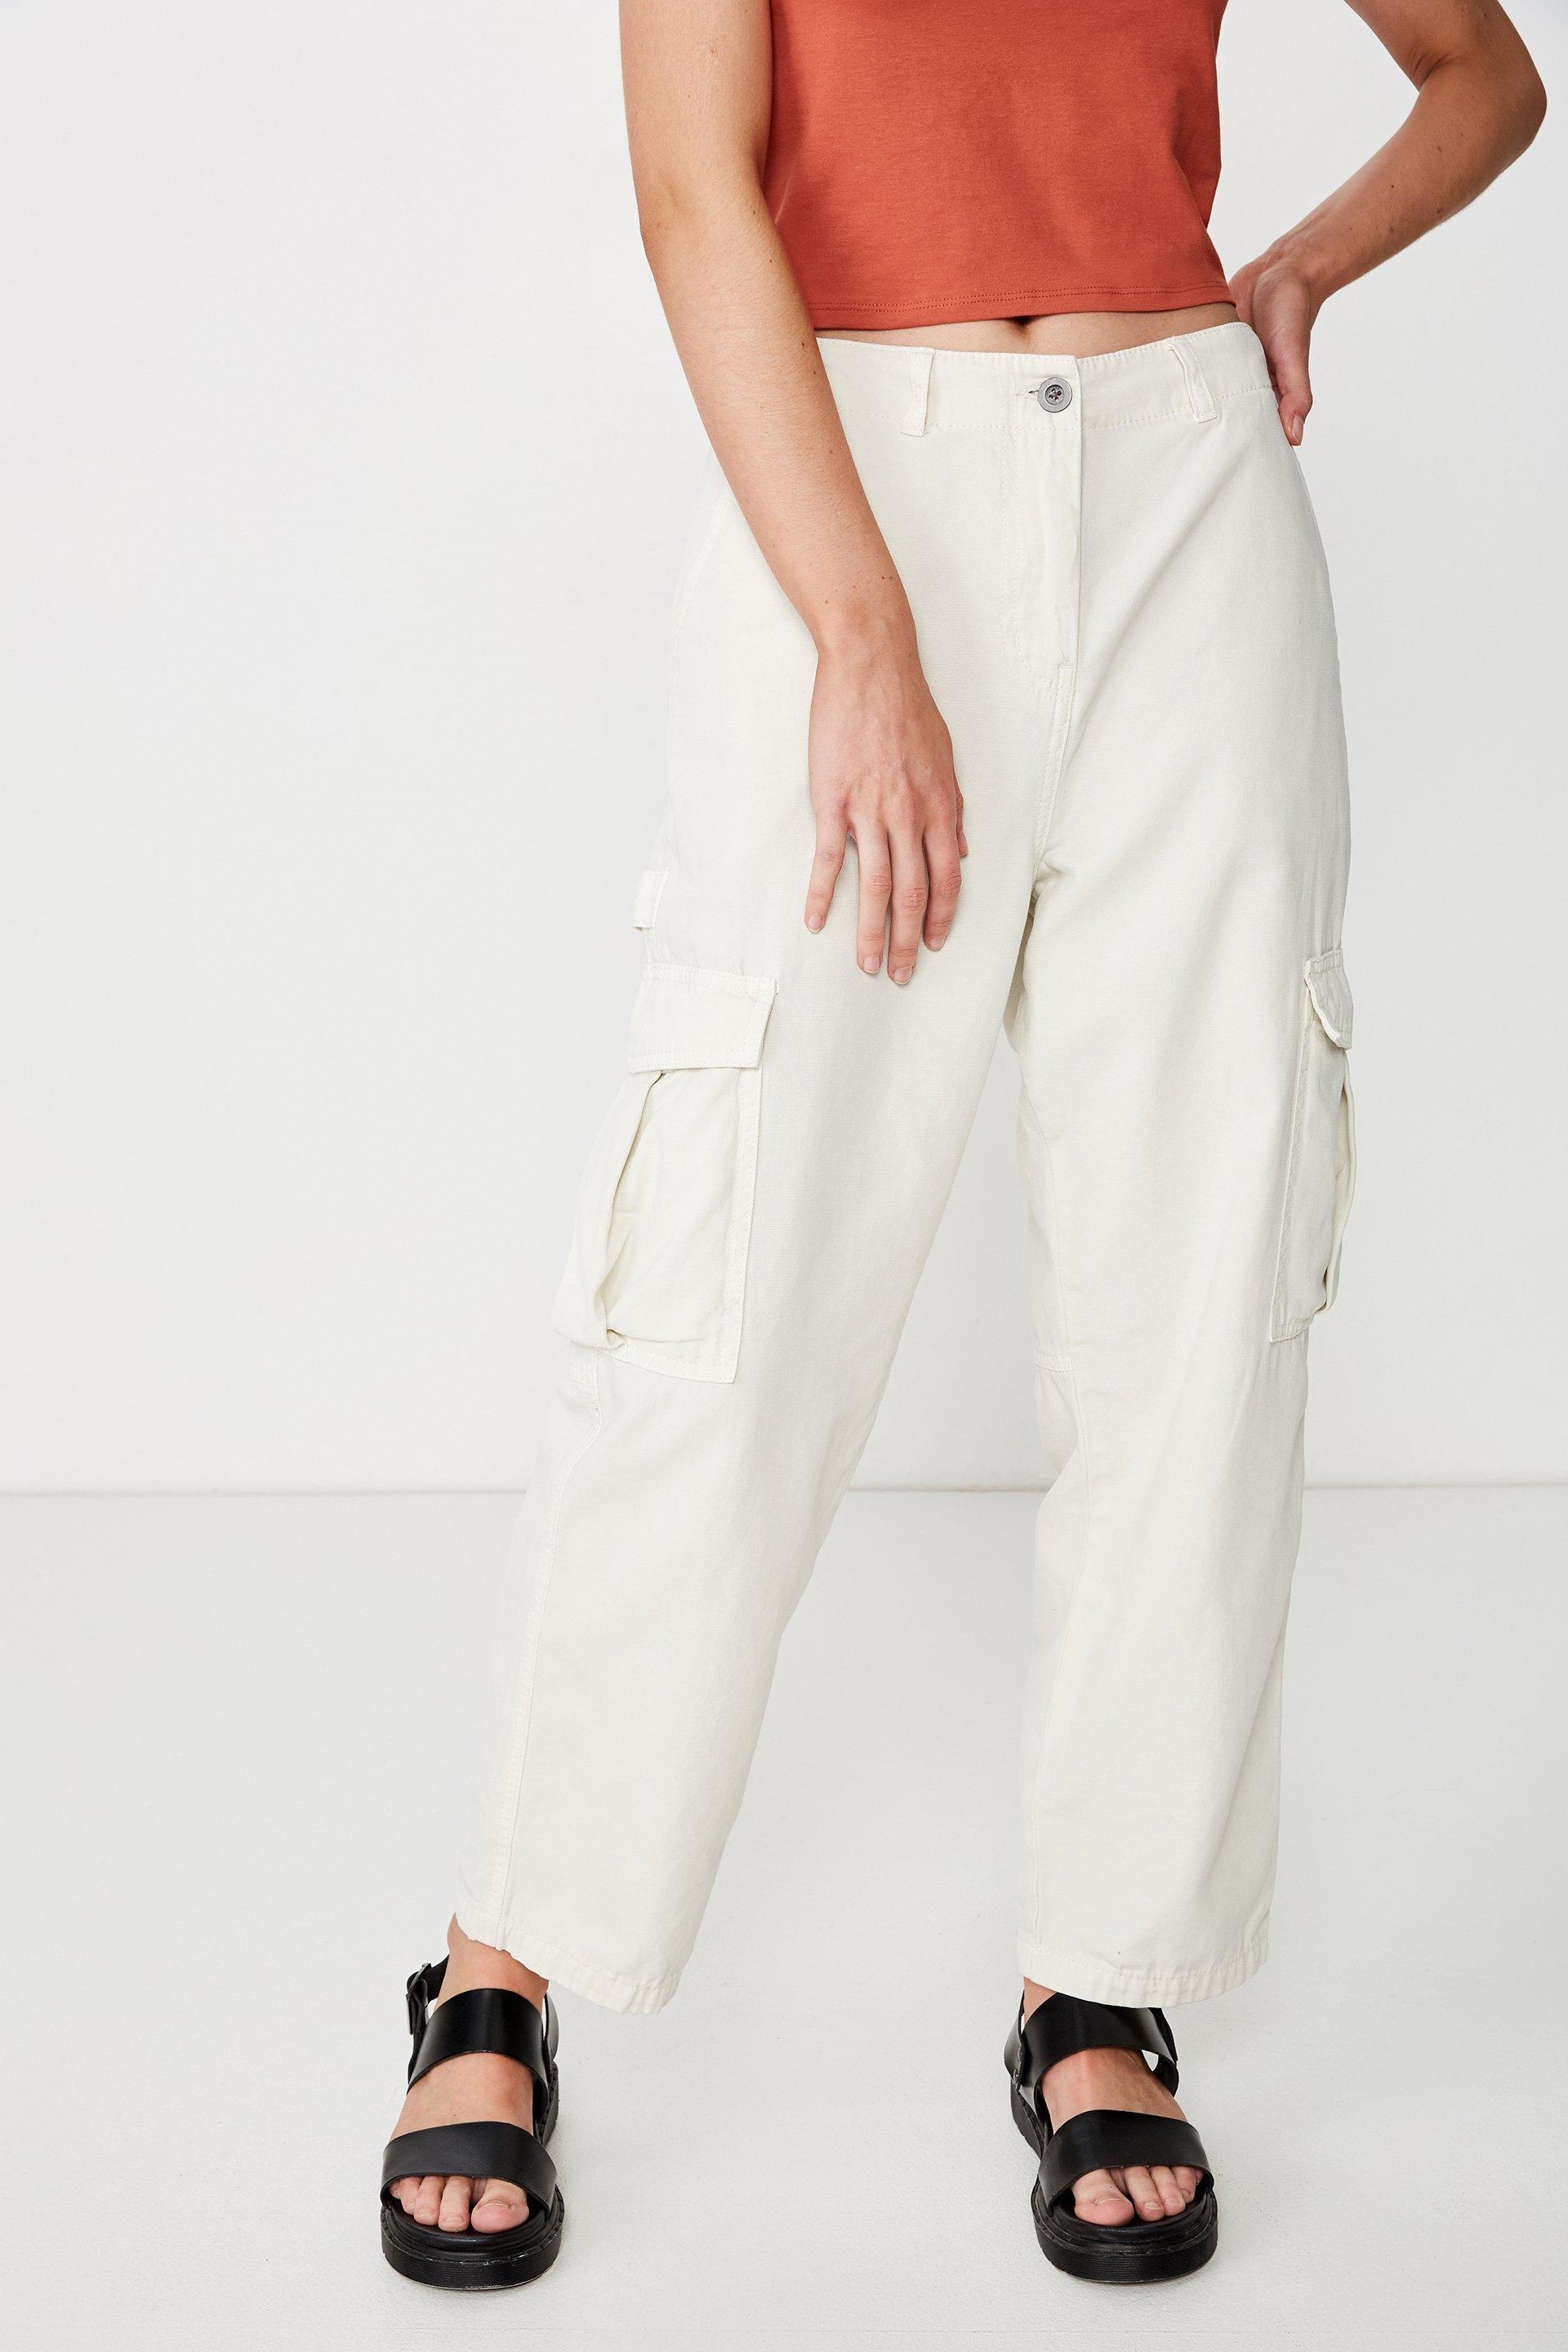 Breya utility pant - cannoli cream Cotton On Trousers | Superbalist.com